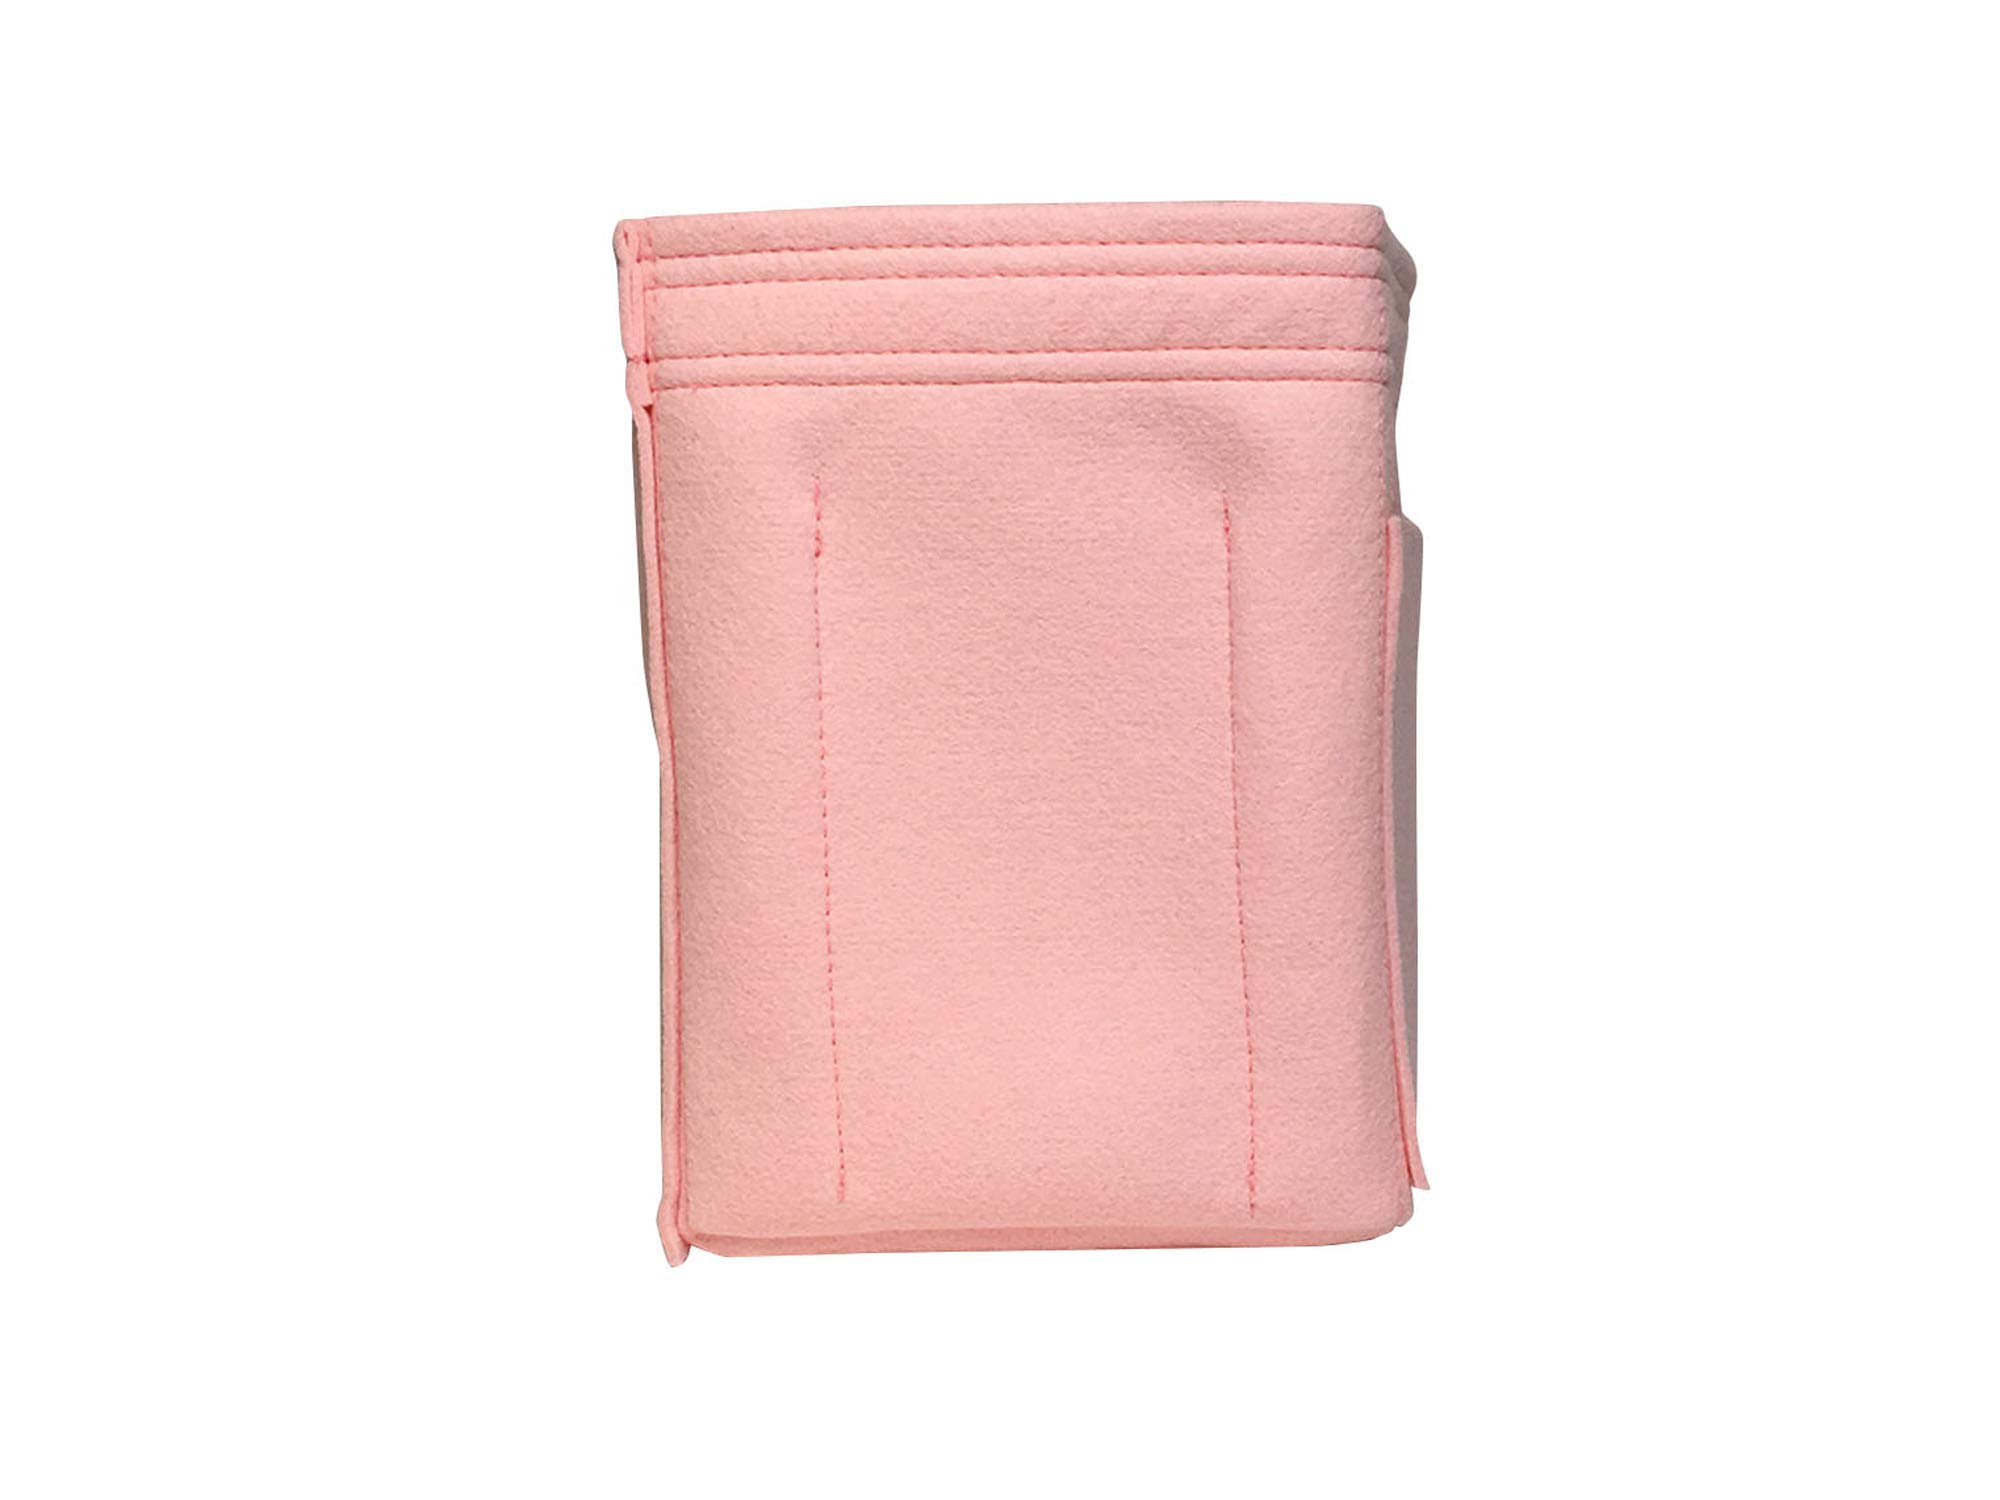 Zoomoni Premium Bag Organizer for Chanel Deauville Large Tote Bag (Handmade/20 Color Options) [Purse Organiser, Liner, Insert, Shaper]